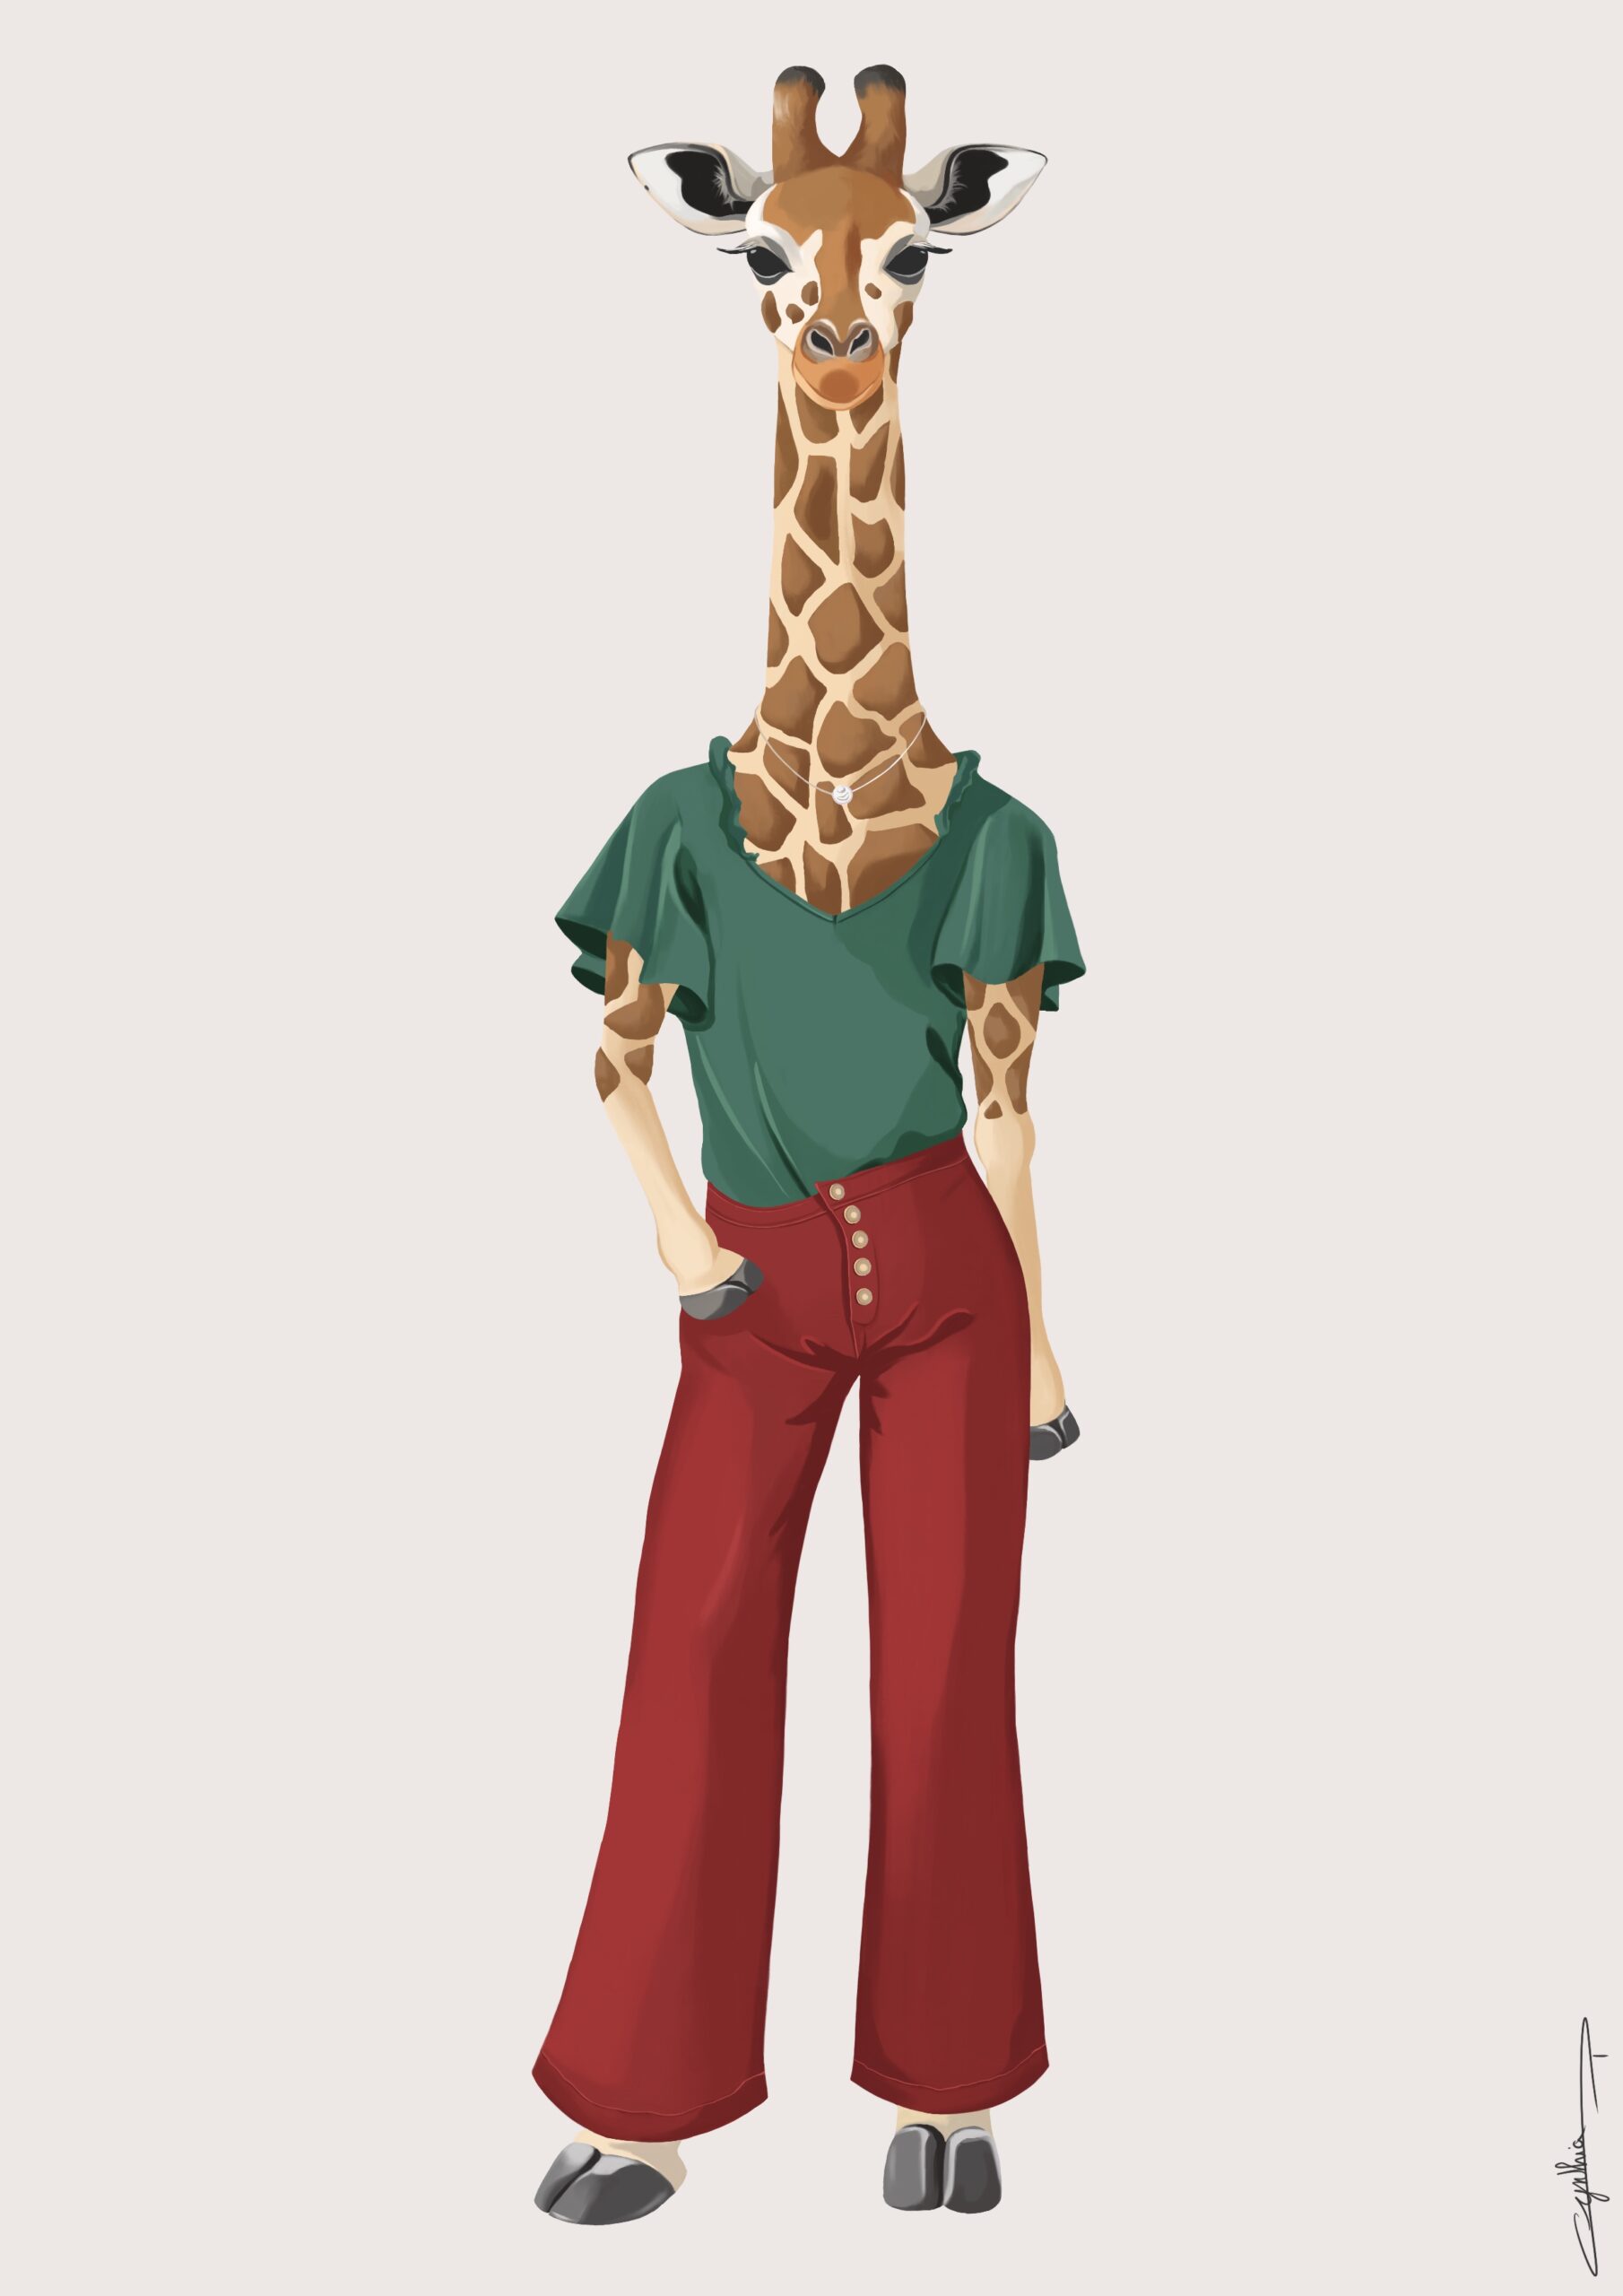 Girafe illustration par Cynthia Artstudio